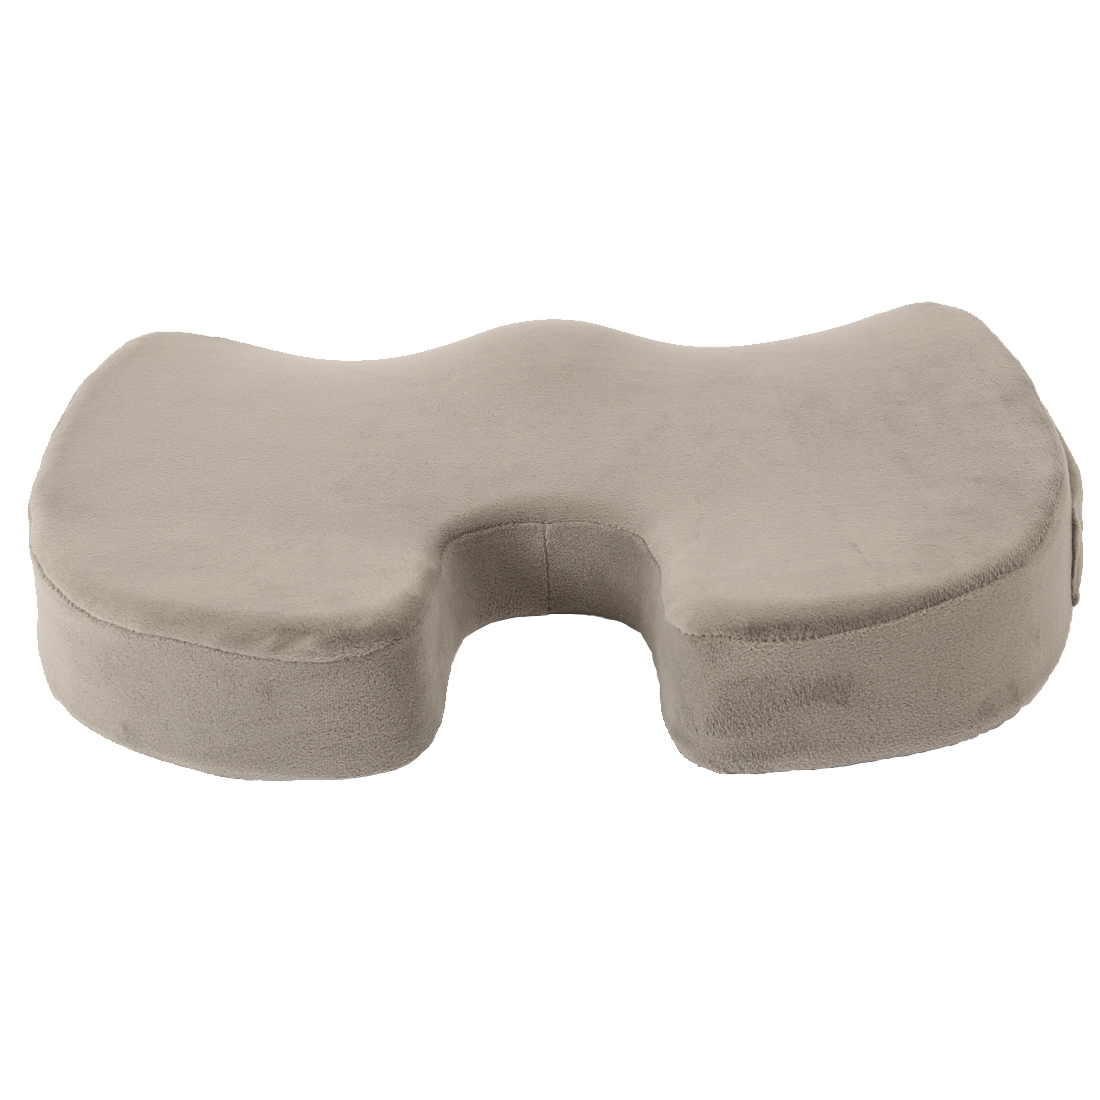 Gray Premium Orthopedic Memory Foam Seat Cushion Coccyx Tailbone Pain - Sciatica Back Pain Relief - Office Chair Wheelchair Car